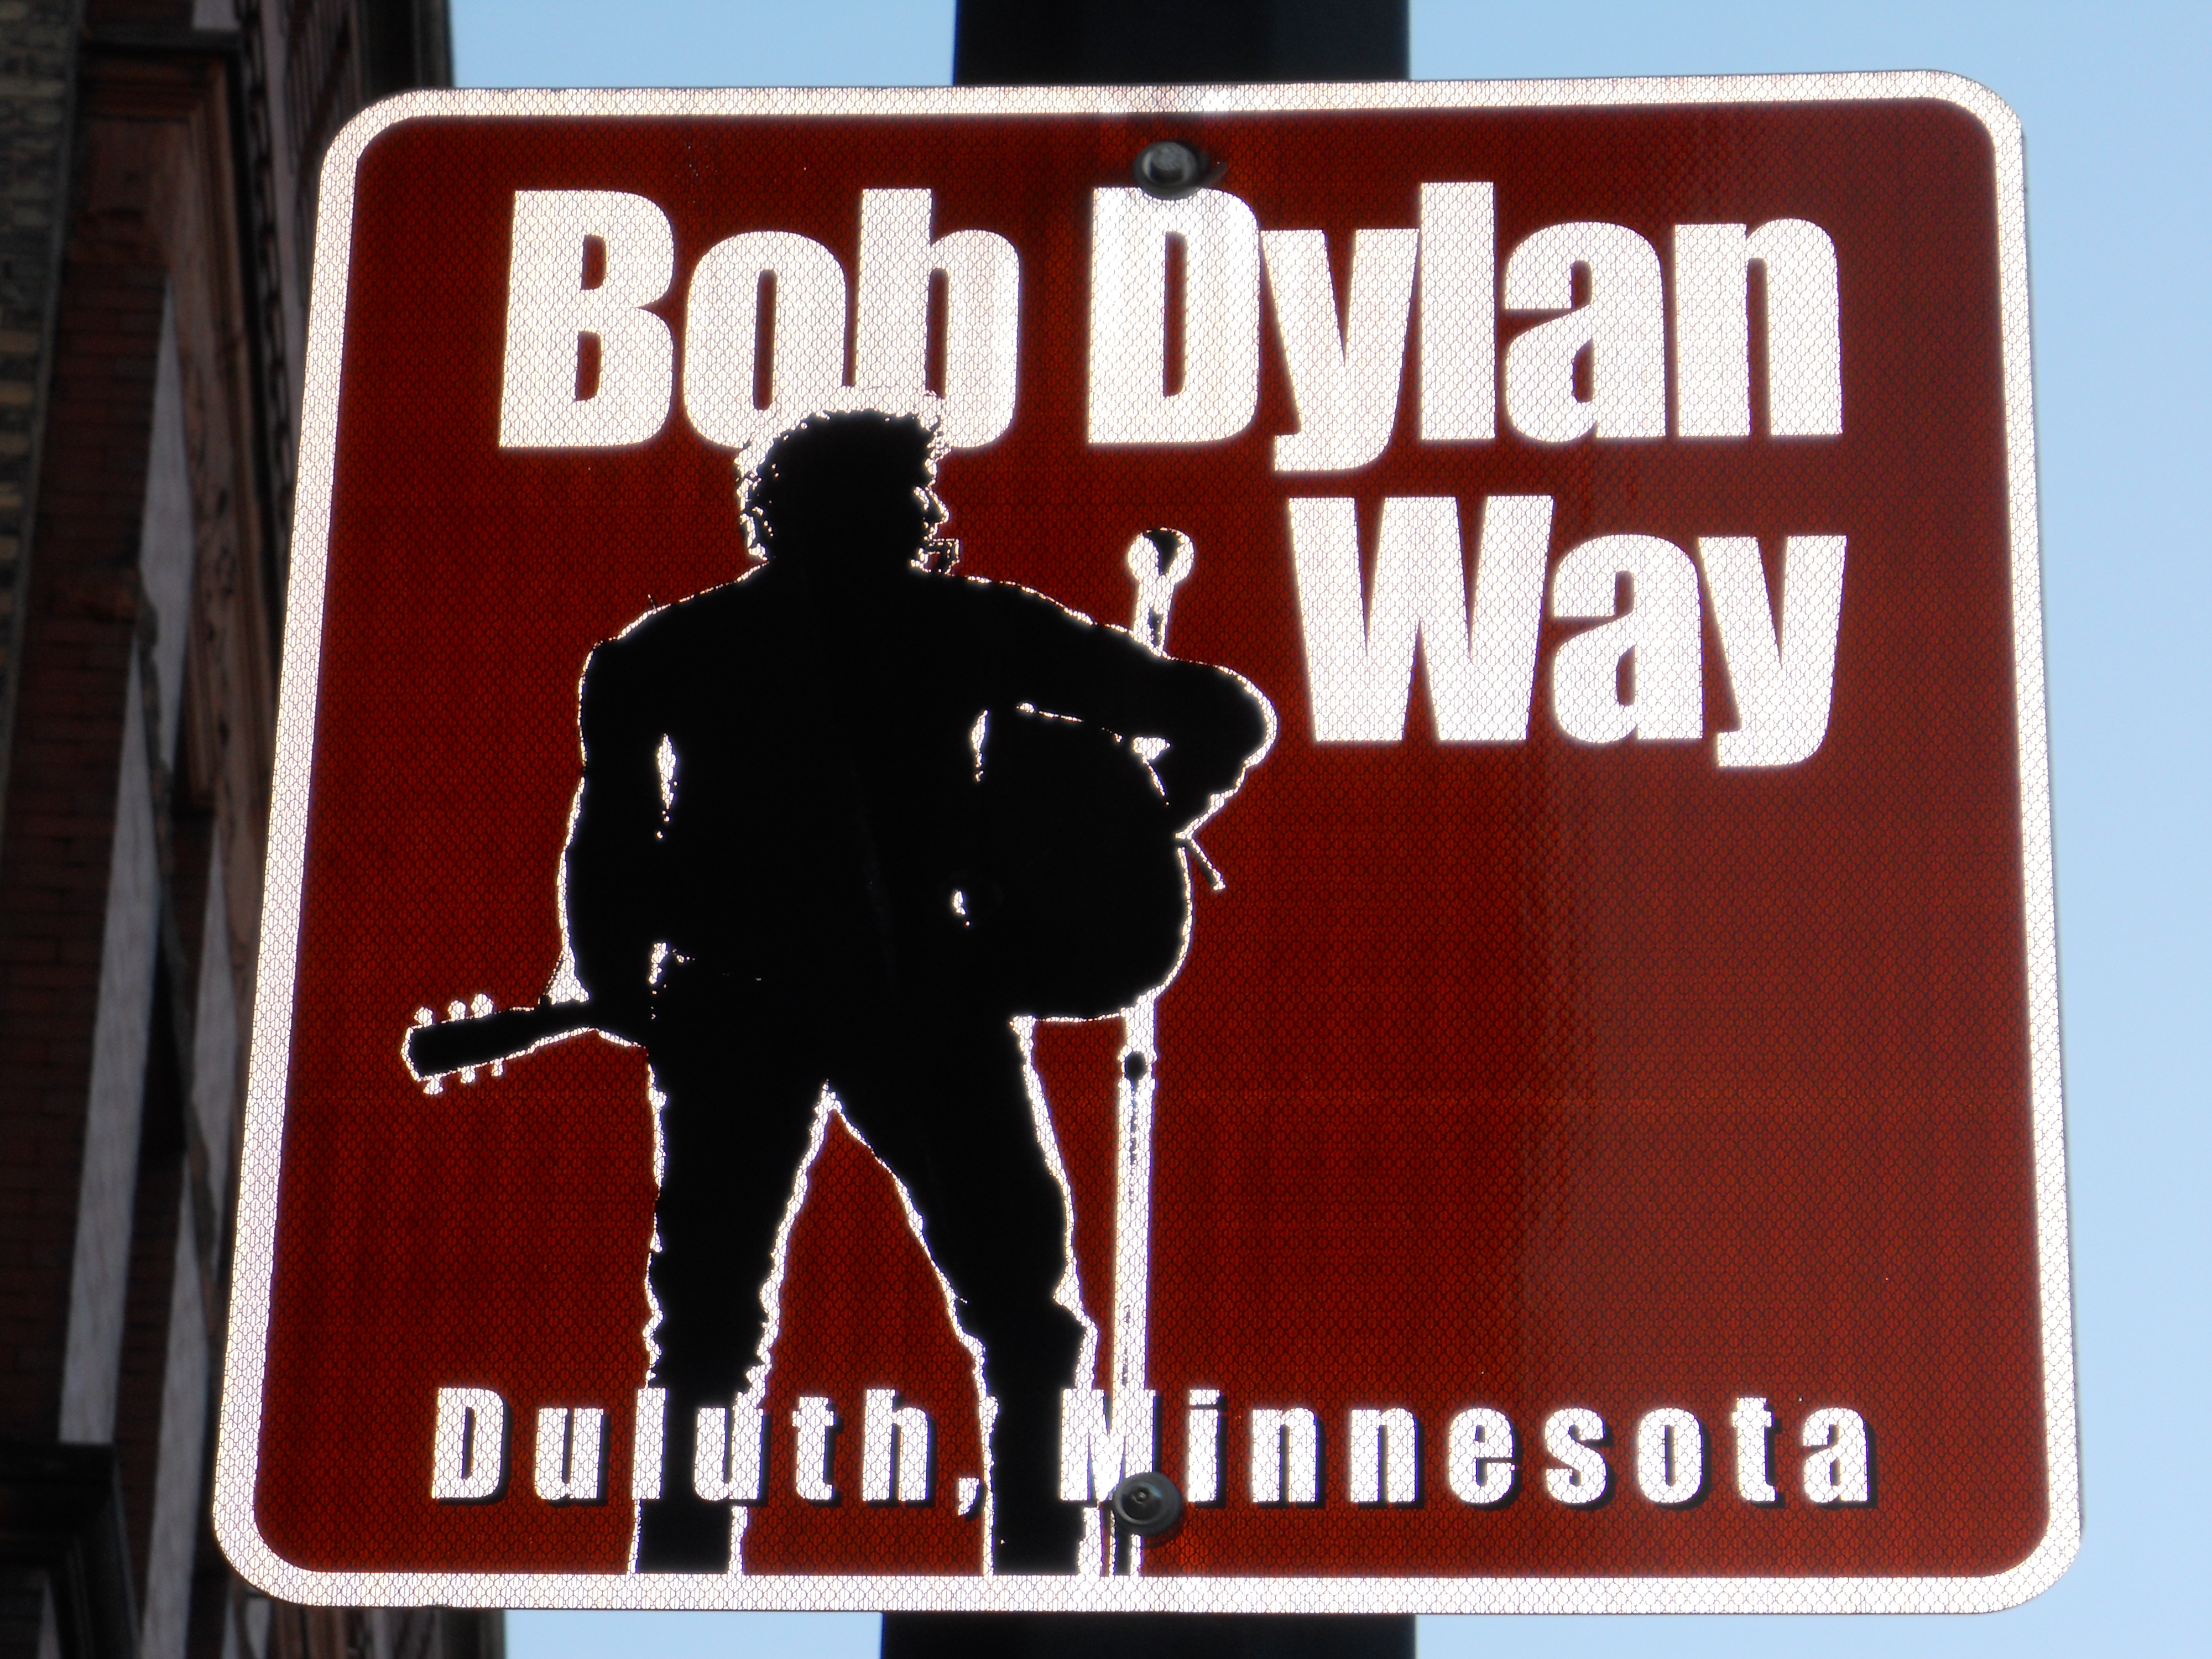 Bob Dylan Way, Duluth, Minnesota. Street sign.